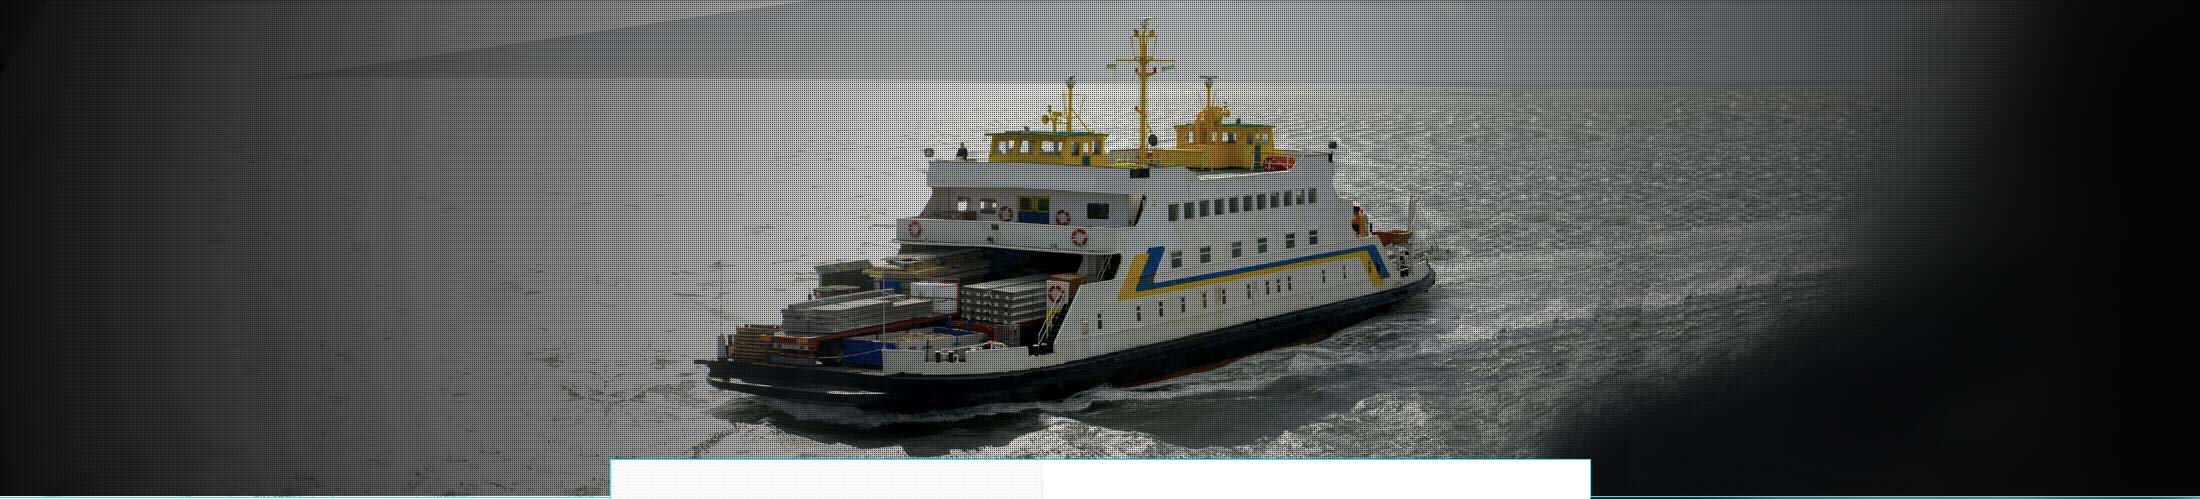 destaque_ferryboat